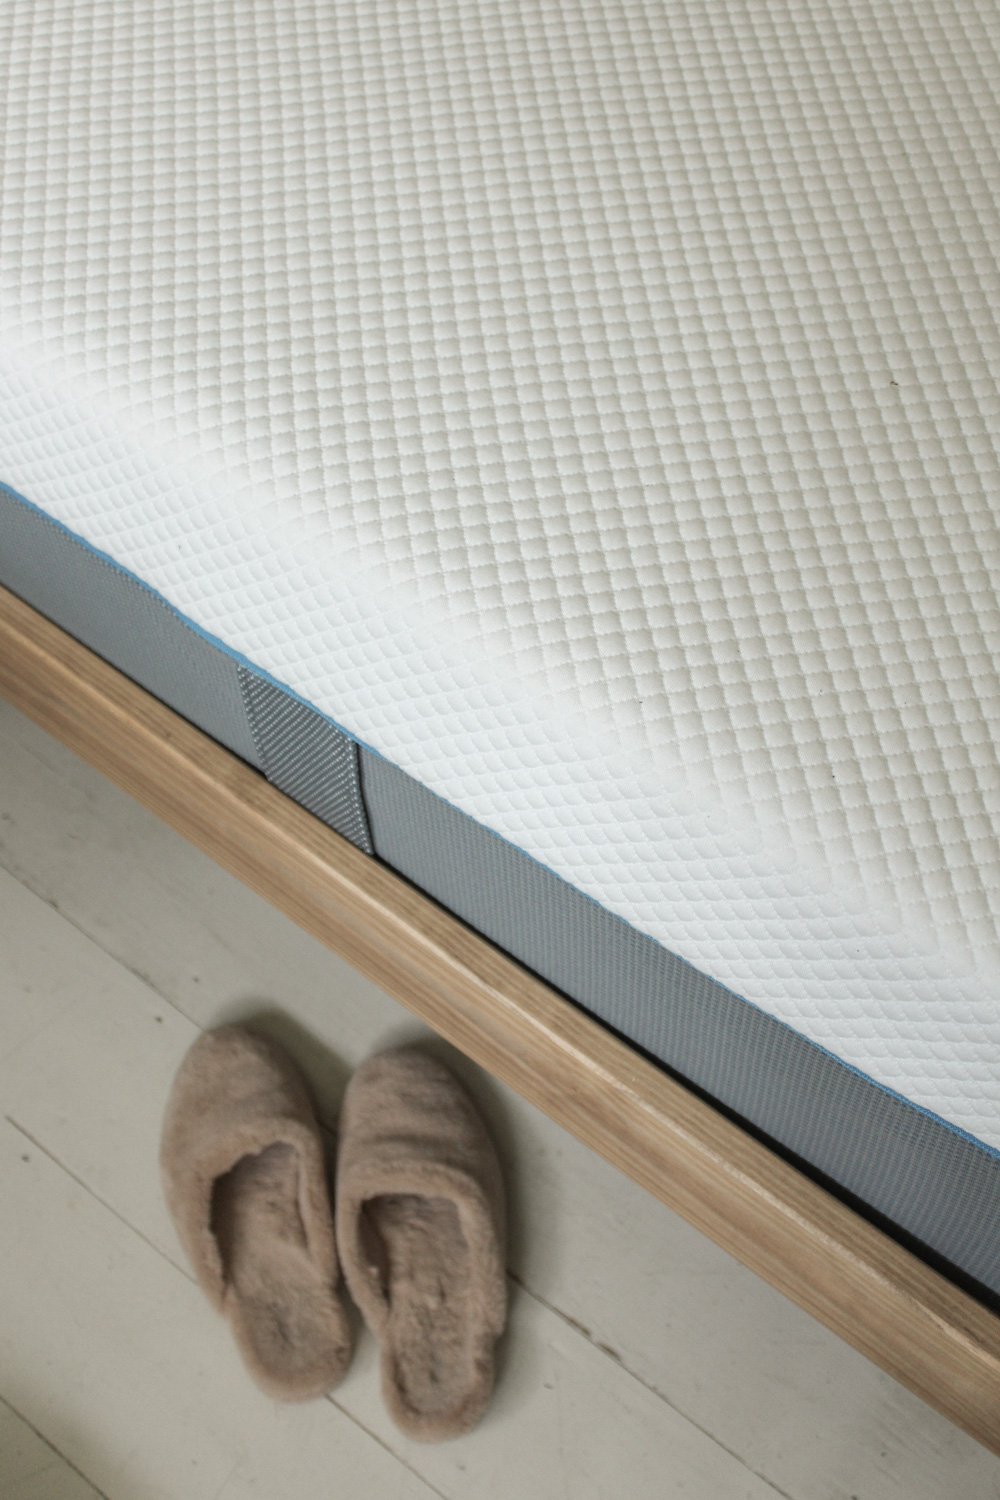 Slippers next to memory foam mattress